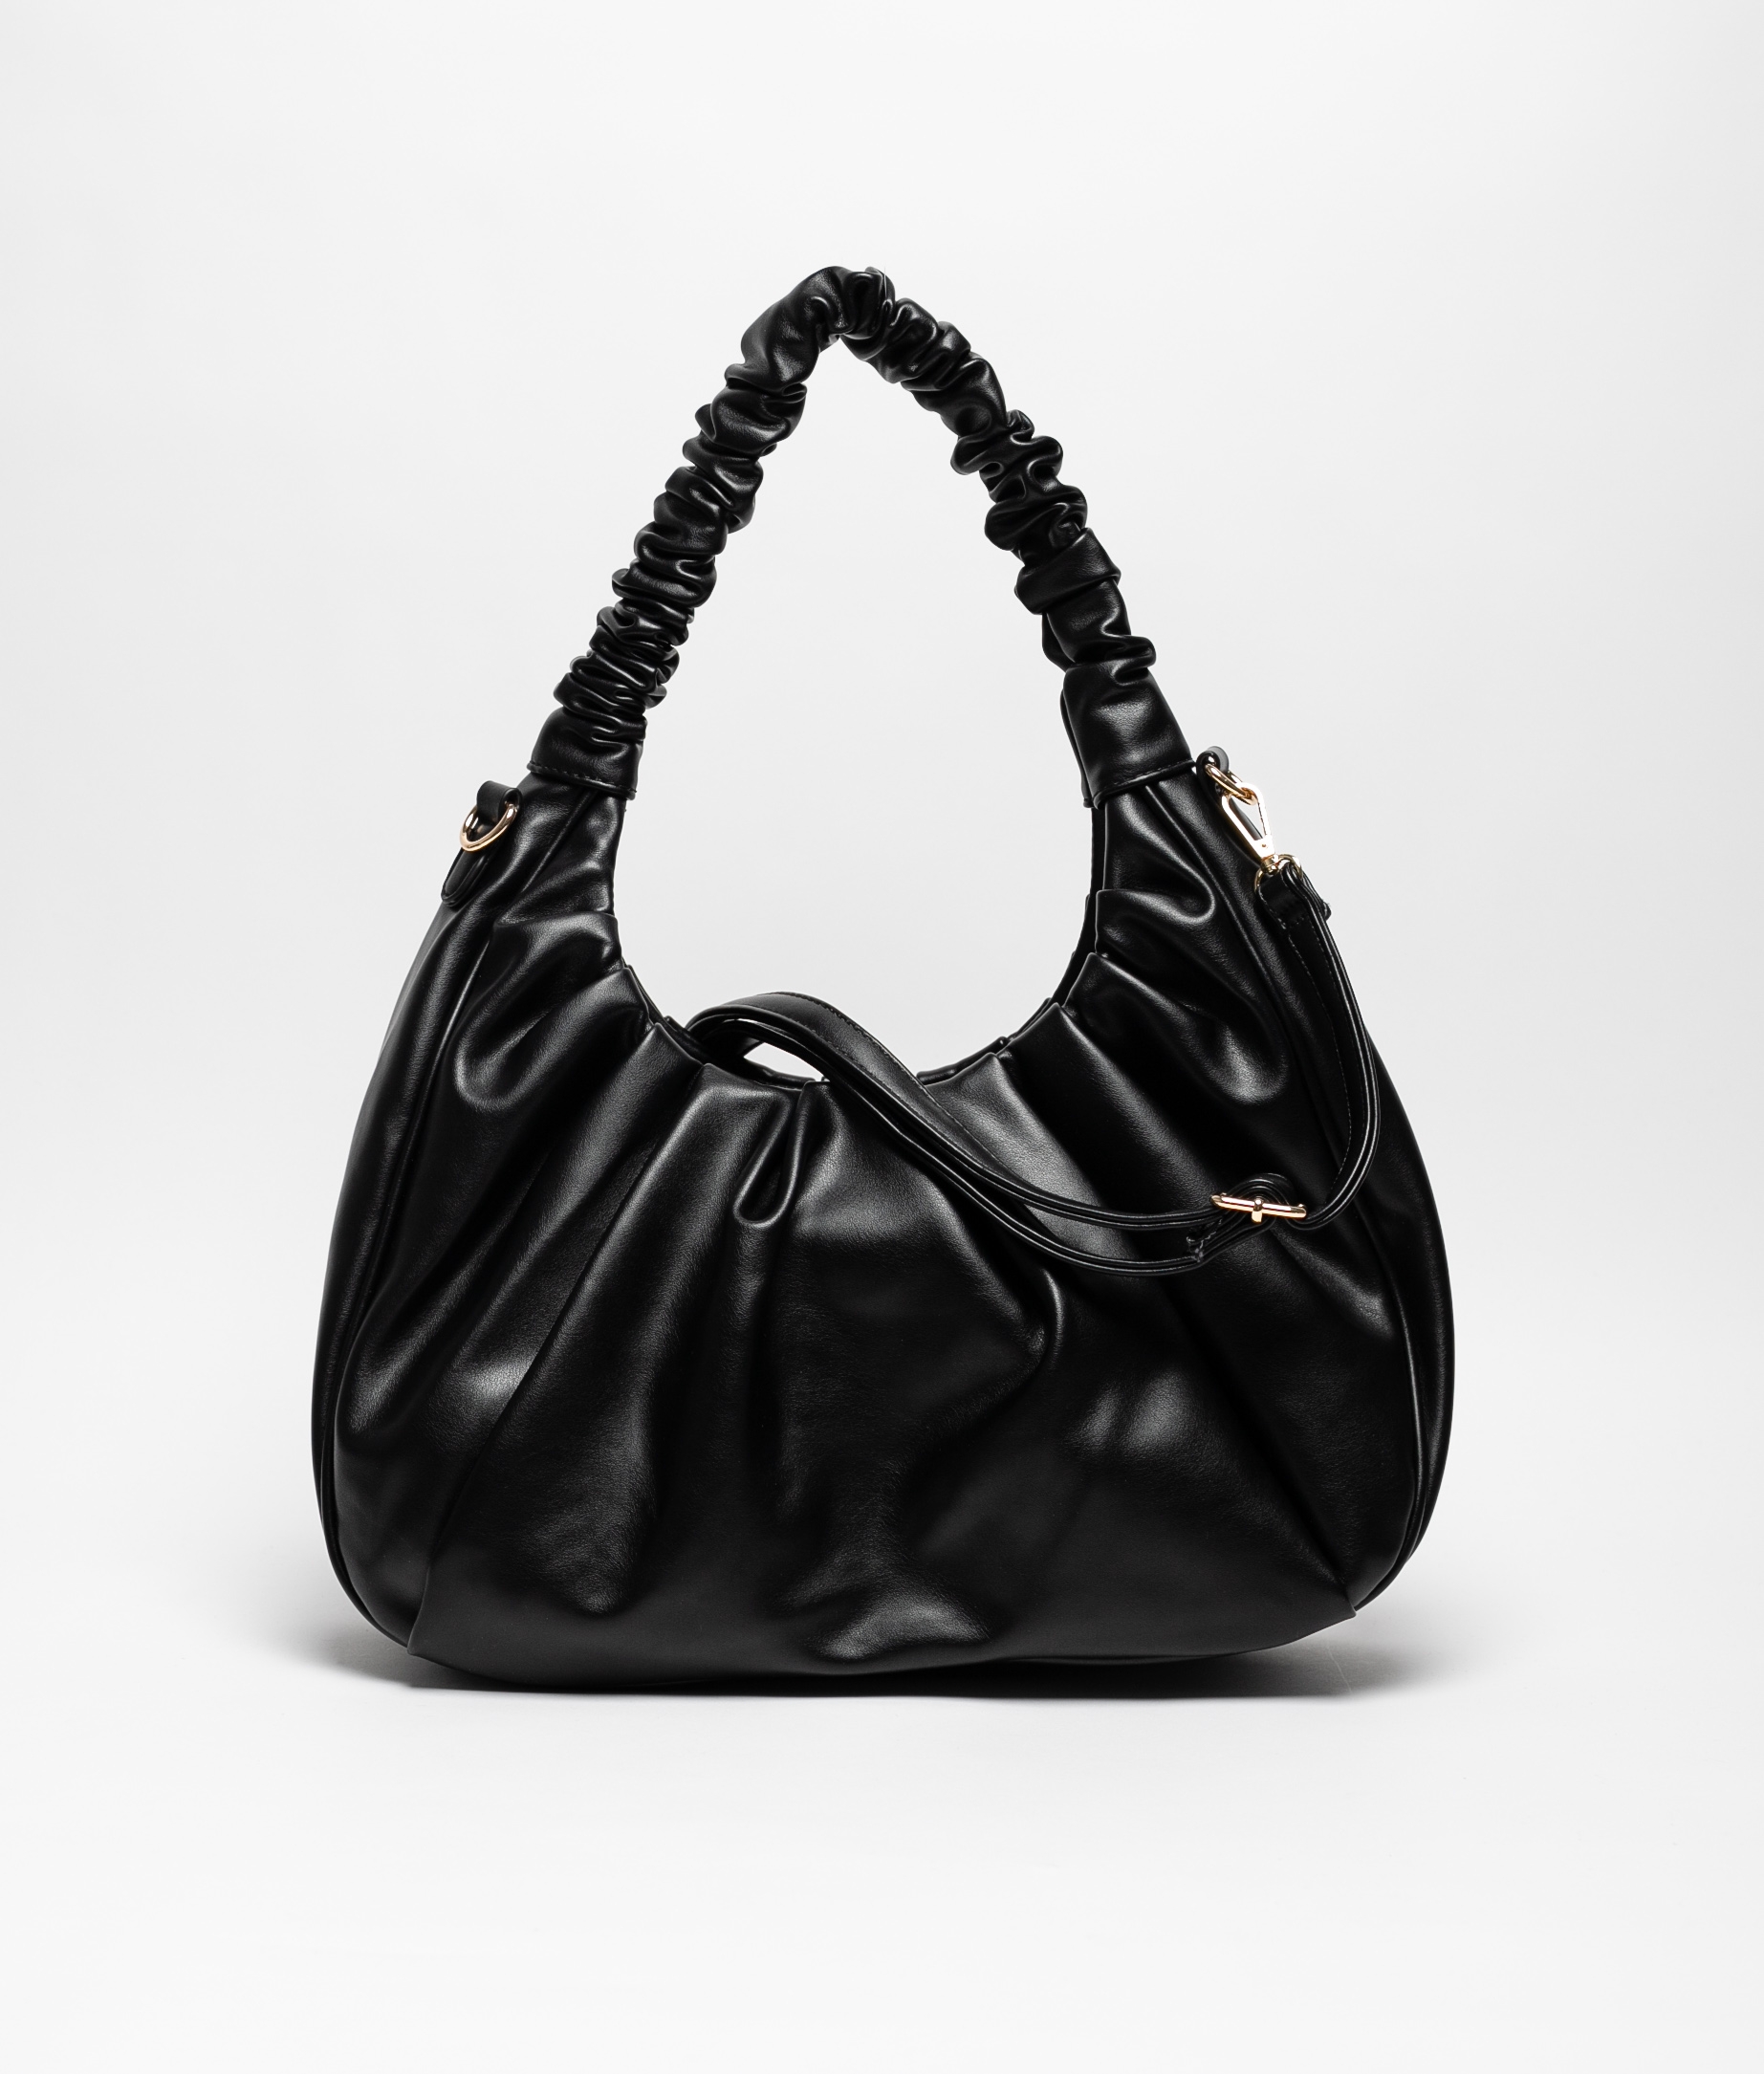 sabrin bag - black